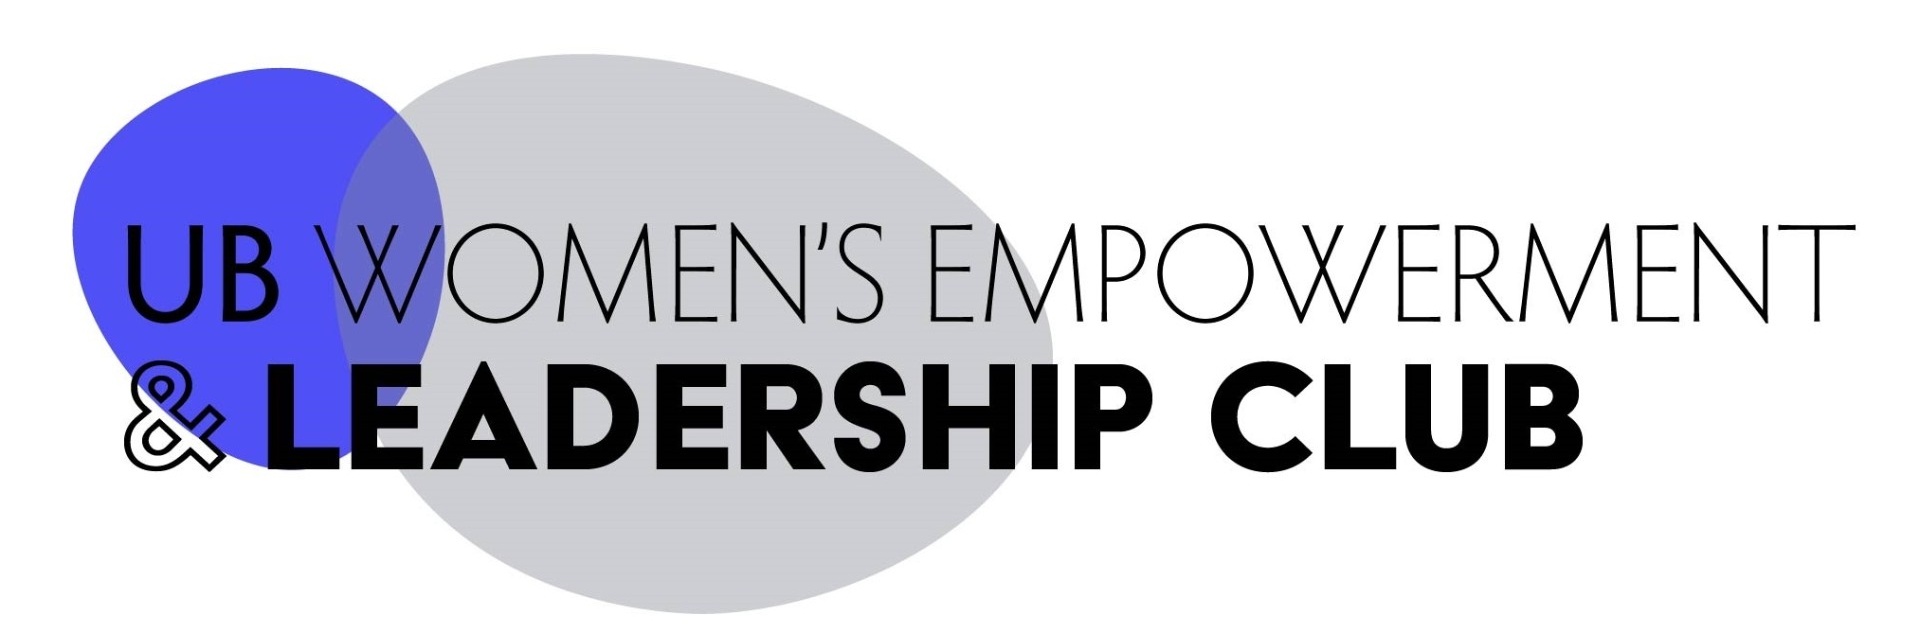 Women's Empowerment and Leadership Club logo. 